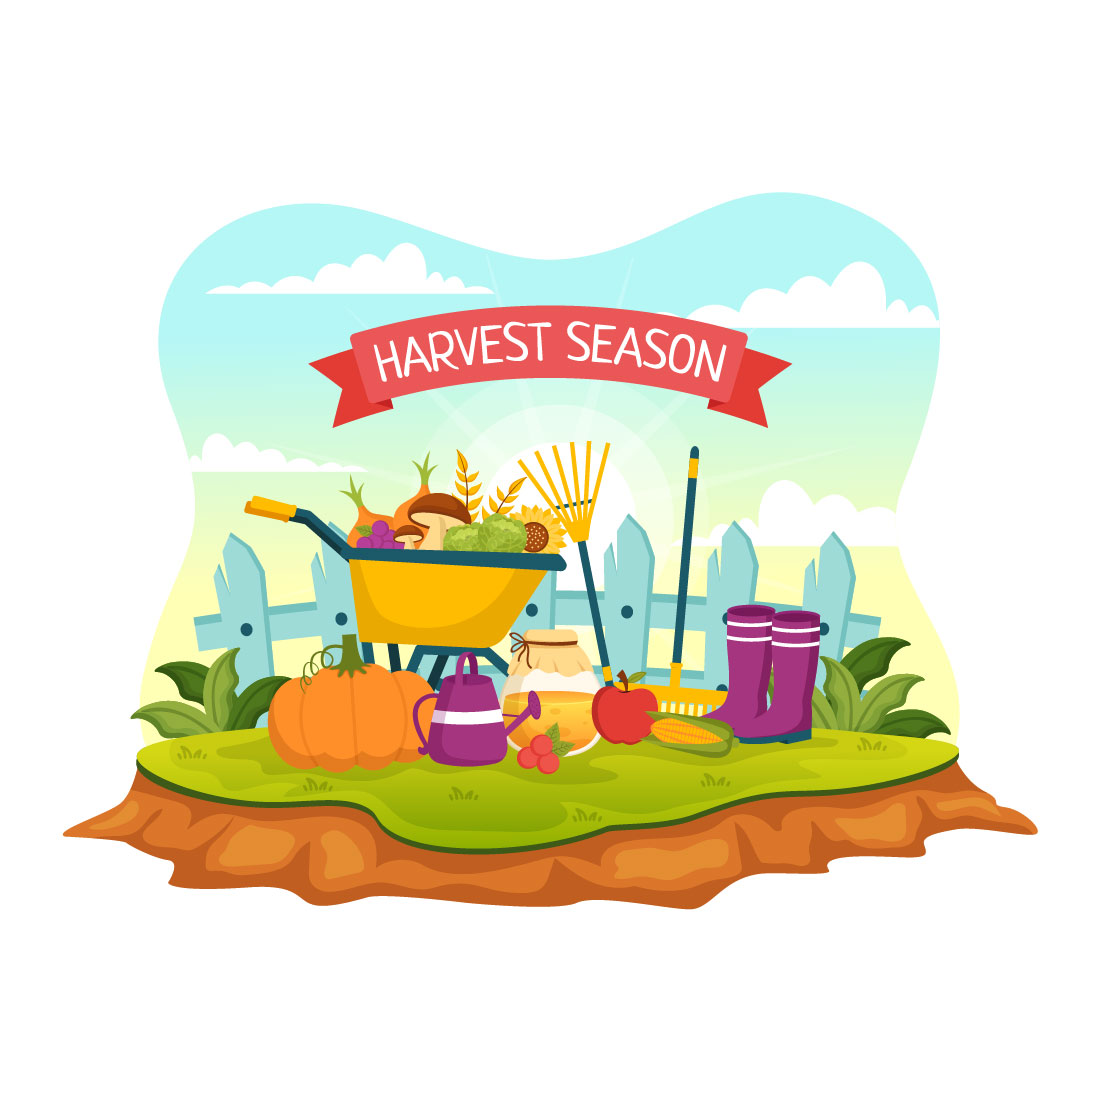 15 Harvest Season Vector Illustration preview image.